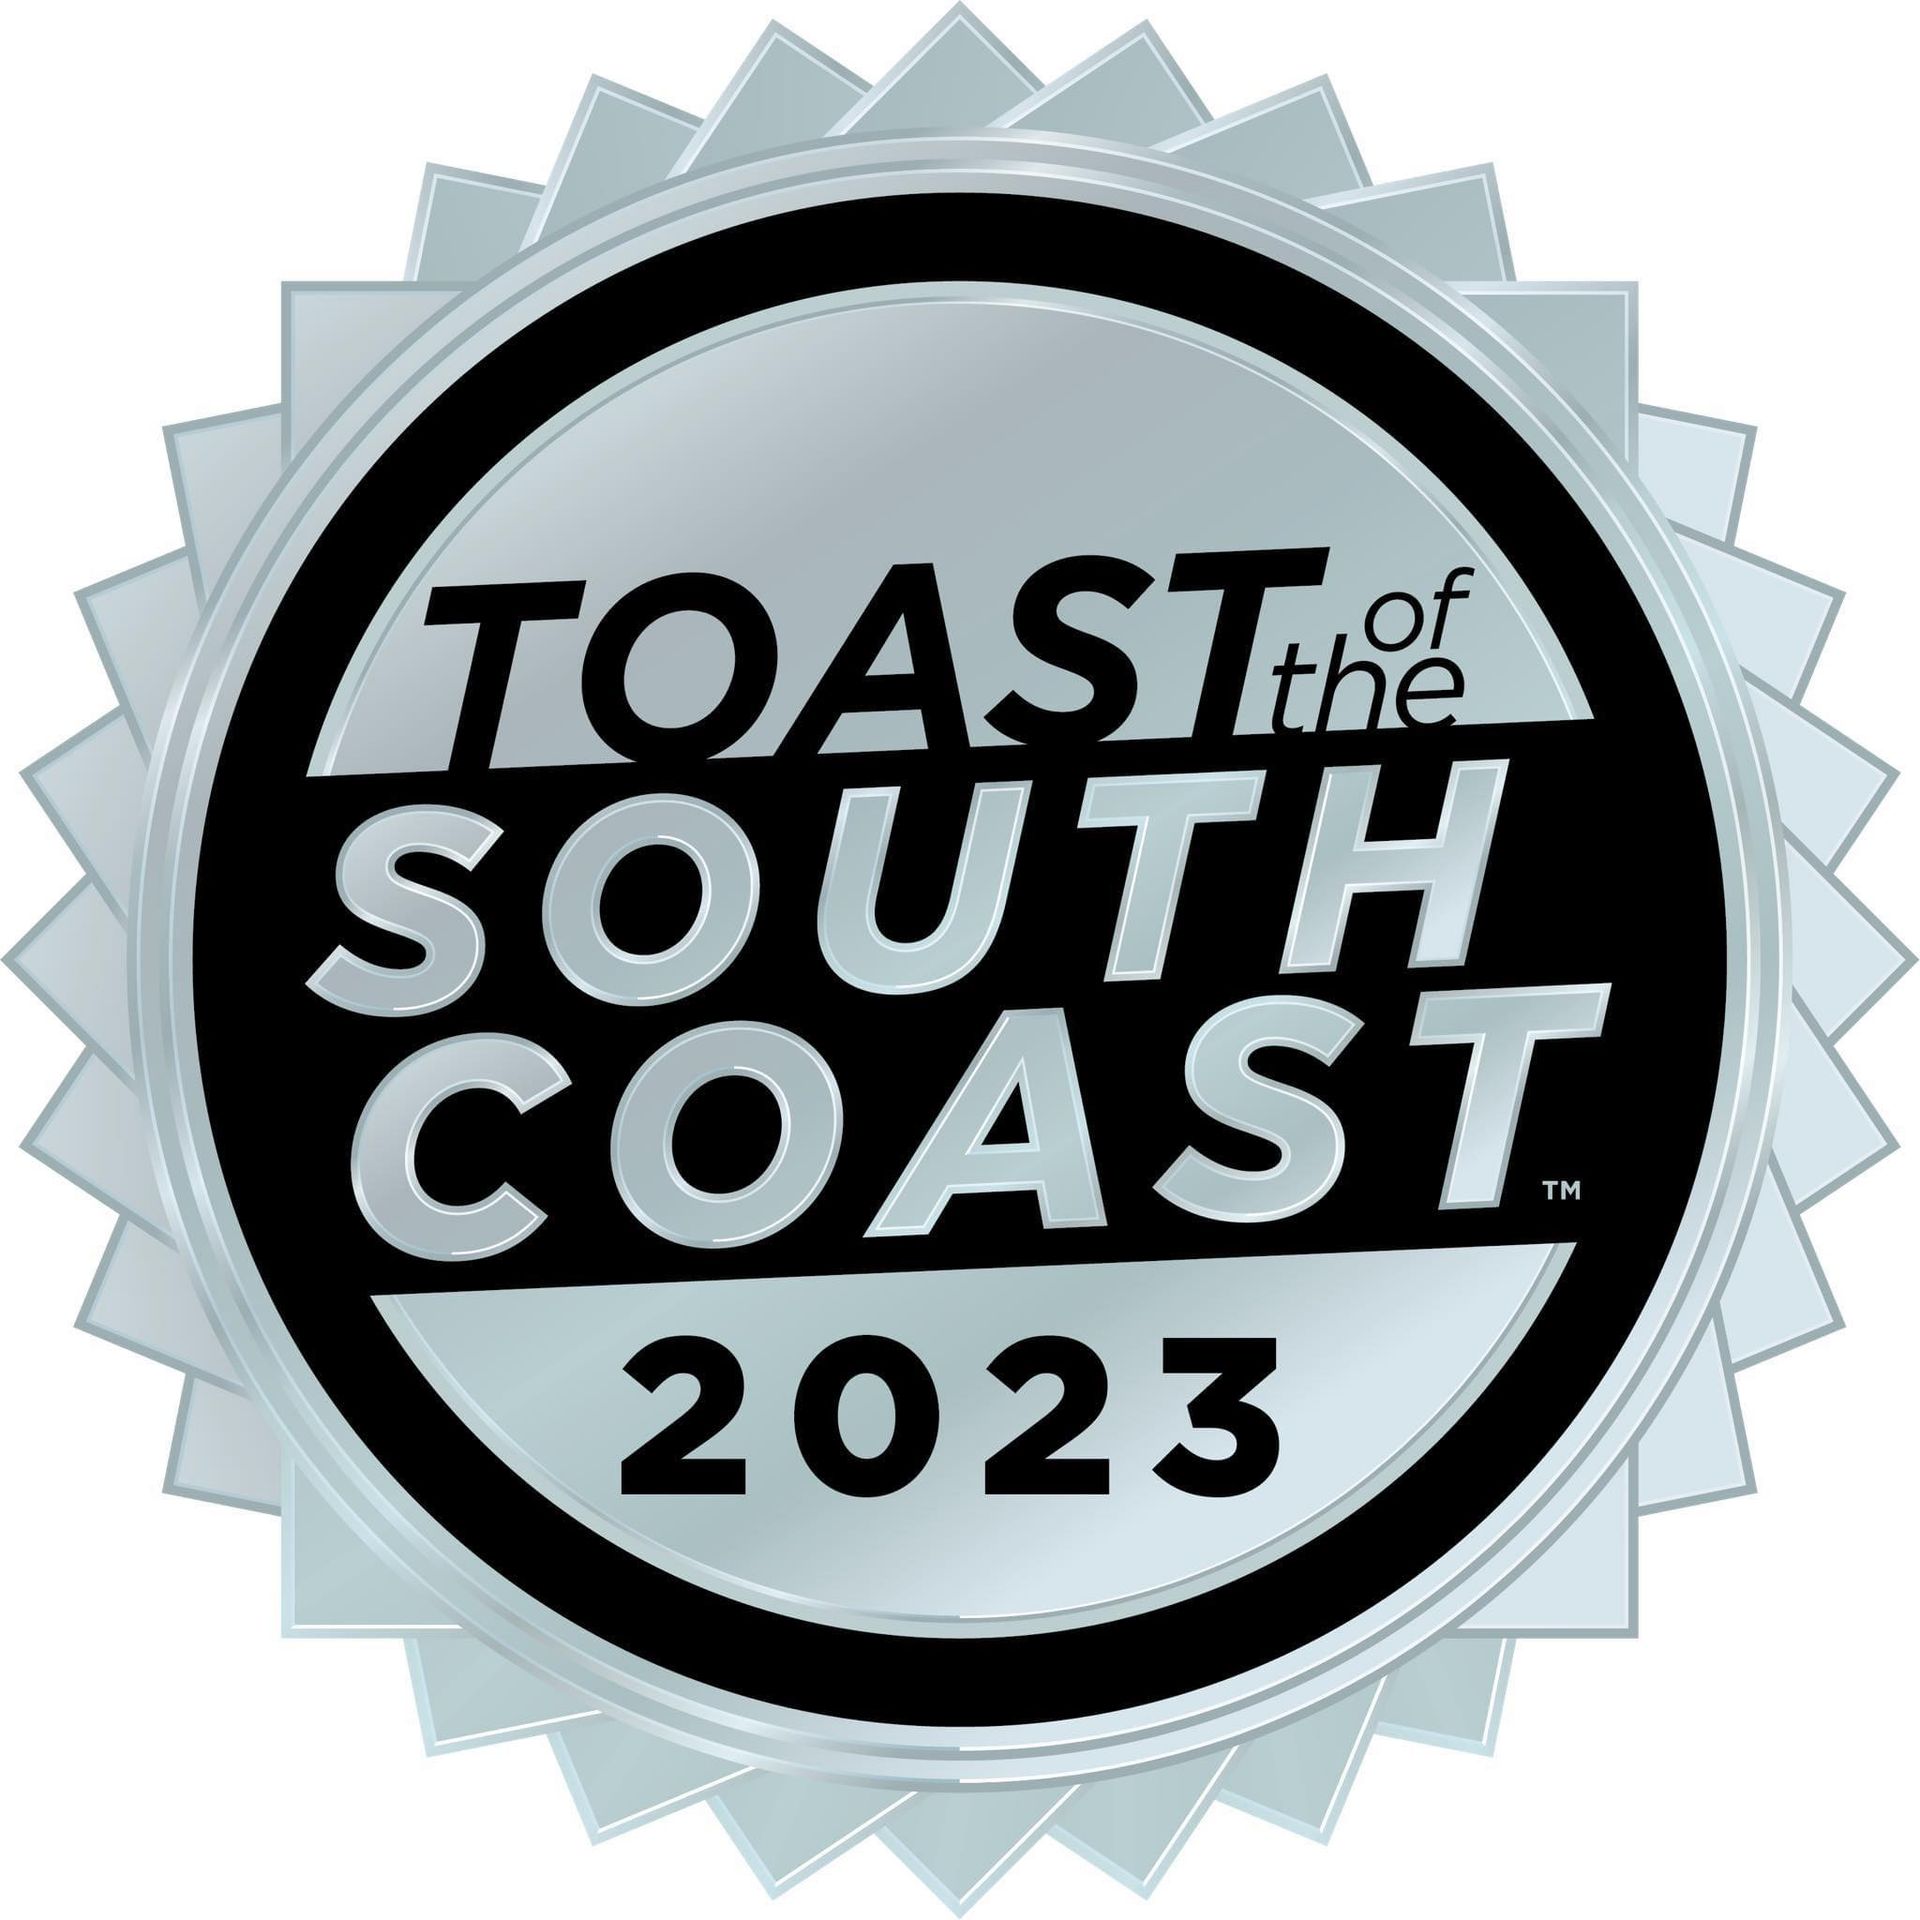 Toast of the South Coast 2023